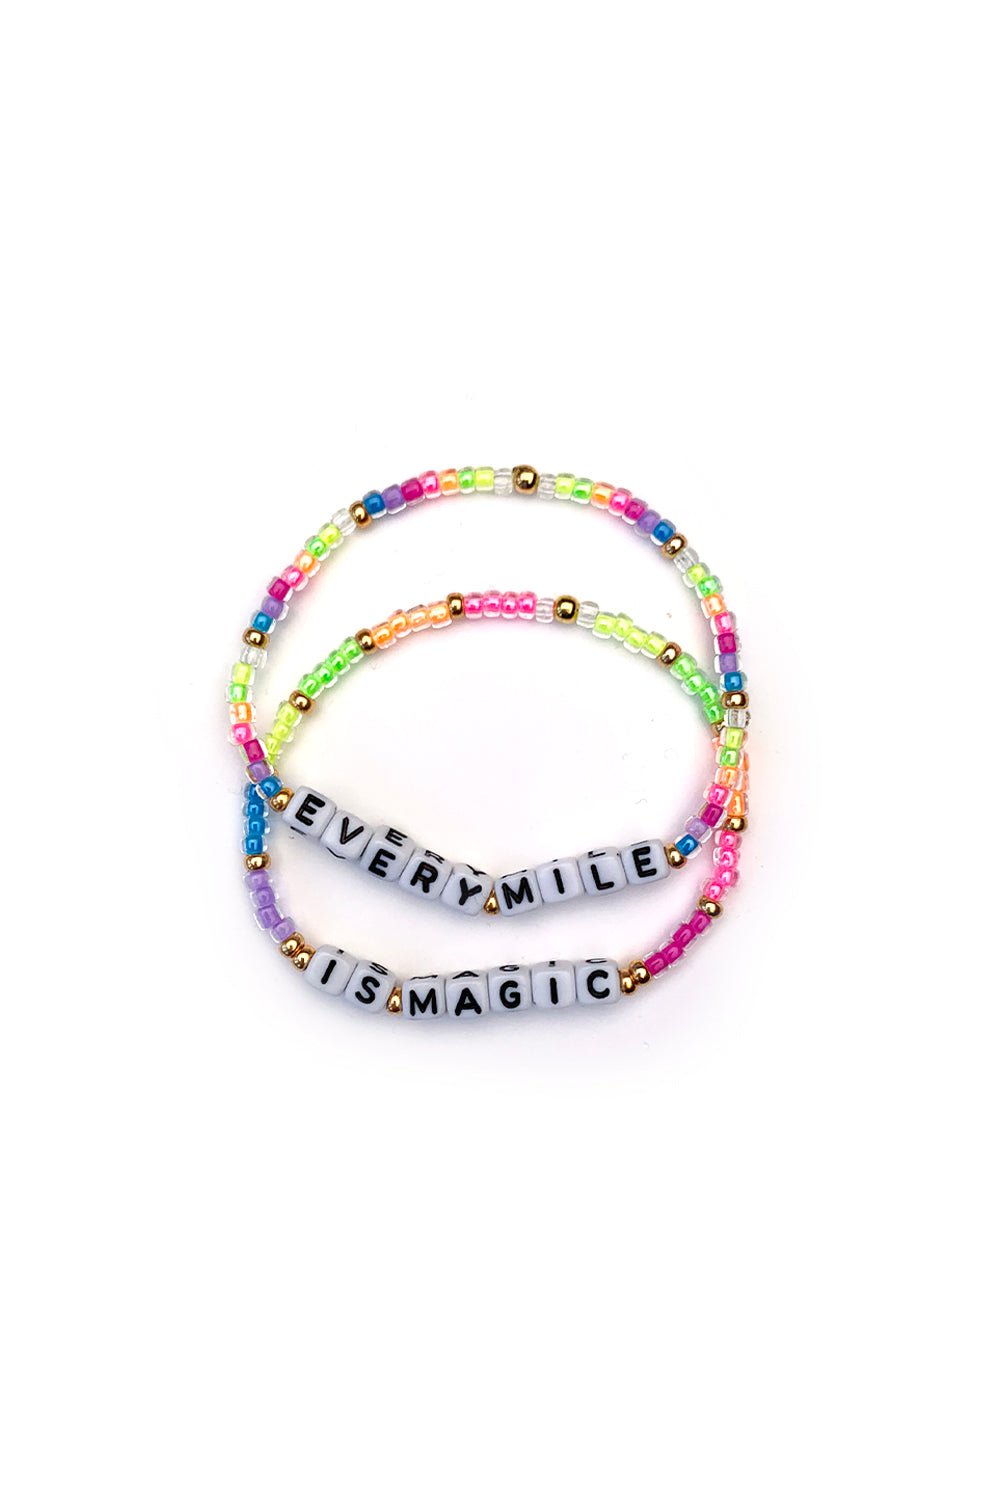 Sarah Marie Design Studio Bracelet 6.25" / Rainbow Every Mile Is Magic Bracelet